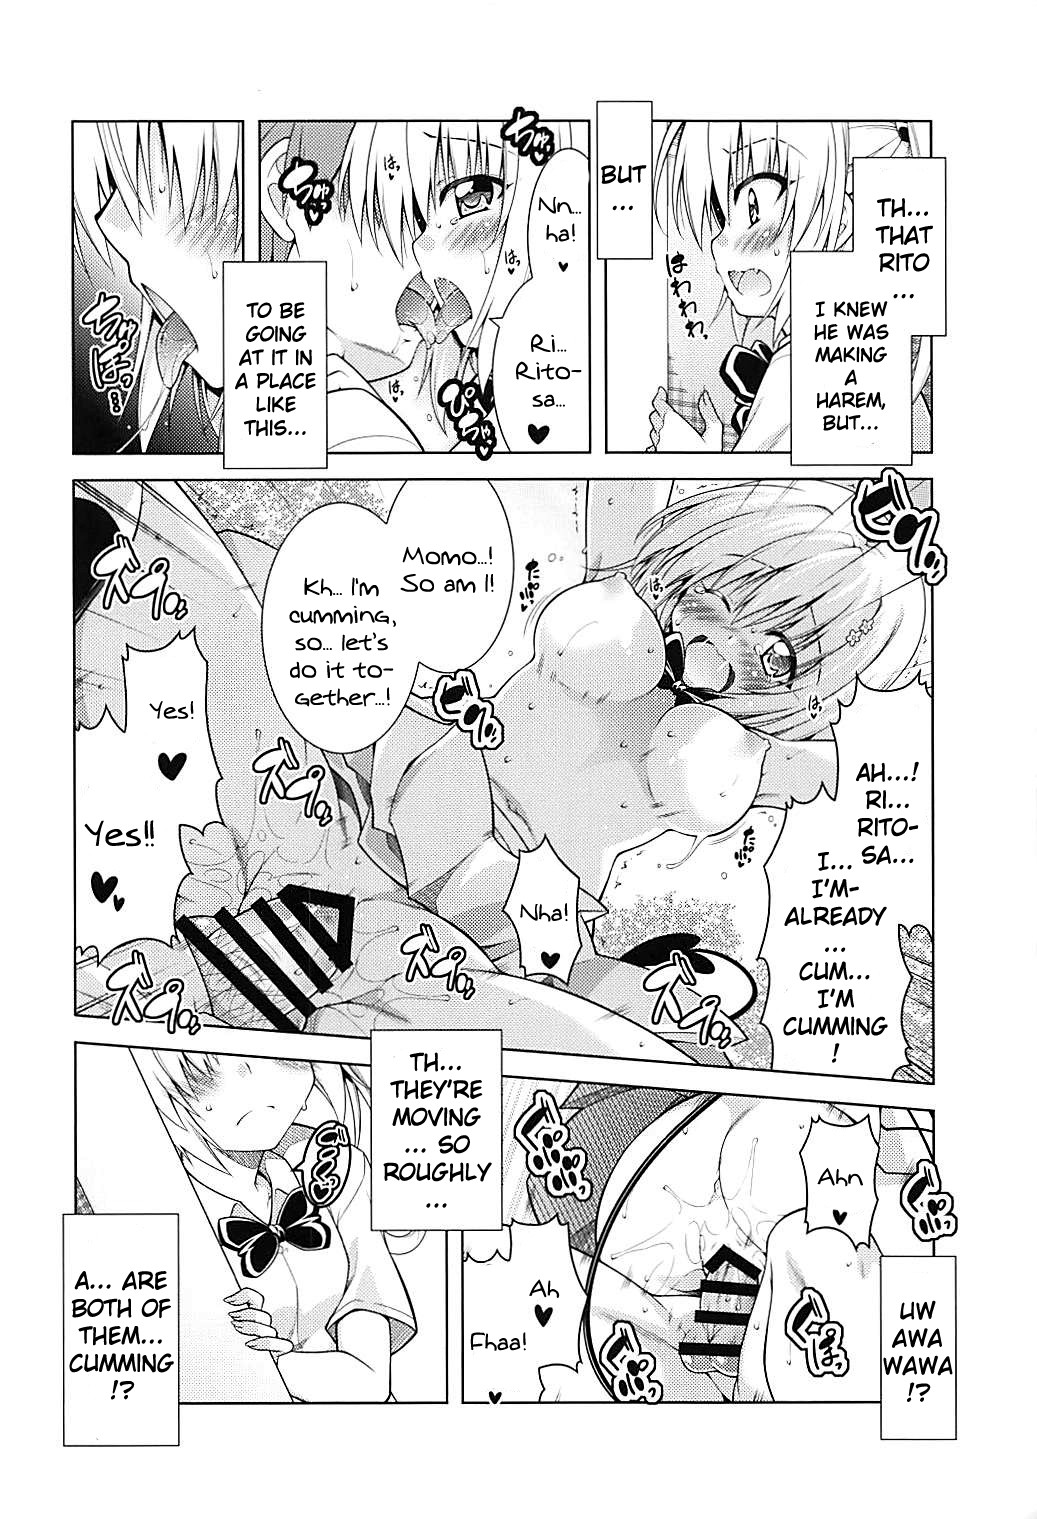 Hentai Manga Comic-Rito's Harem Lifestyle 6-Read-3